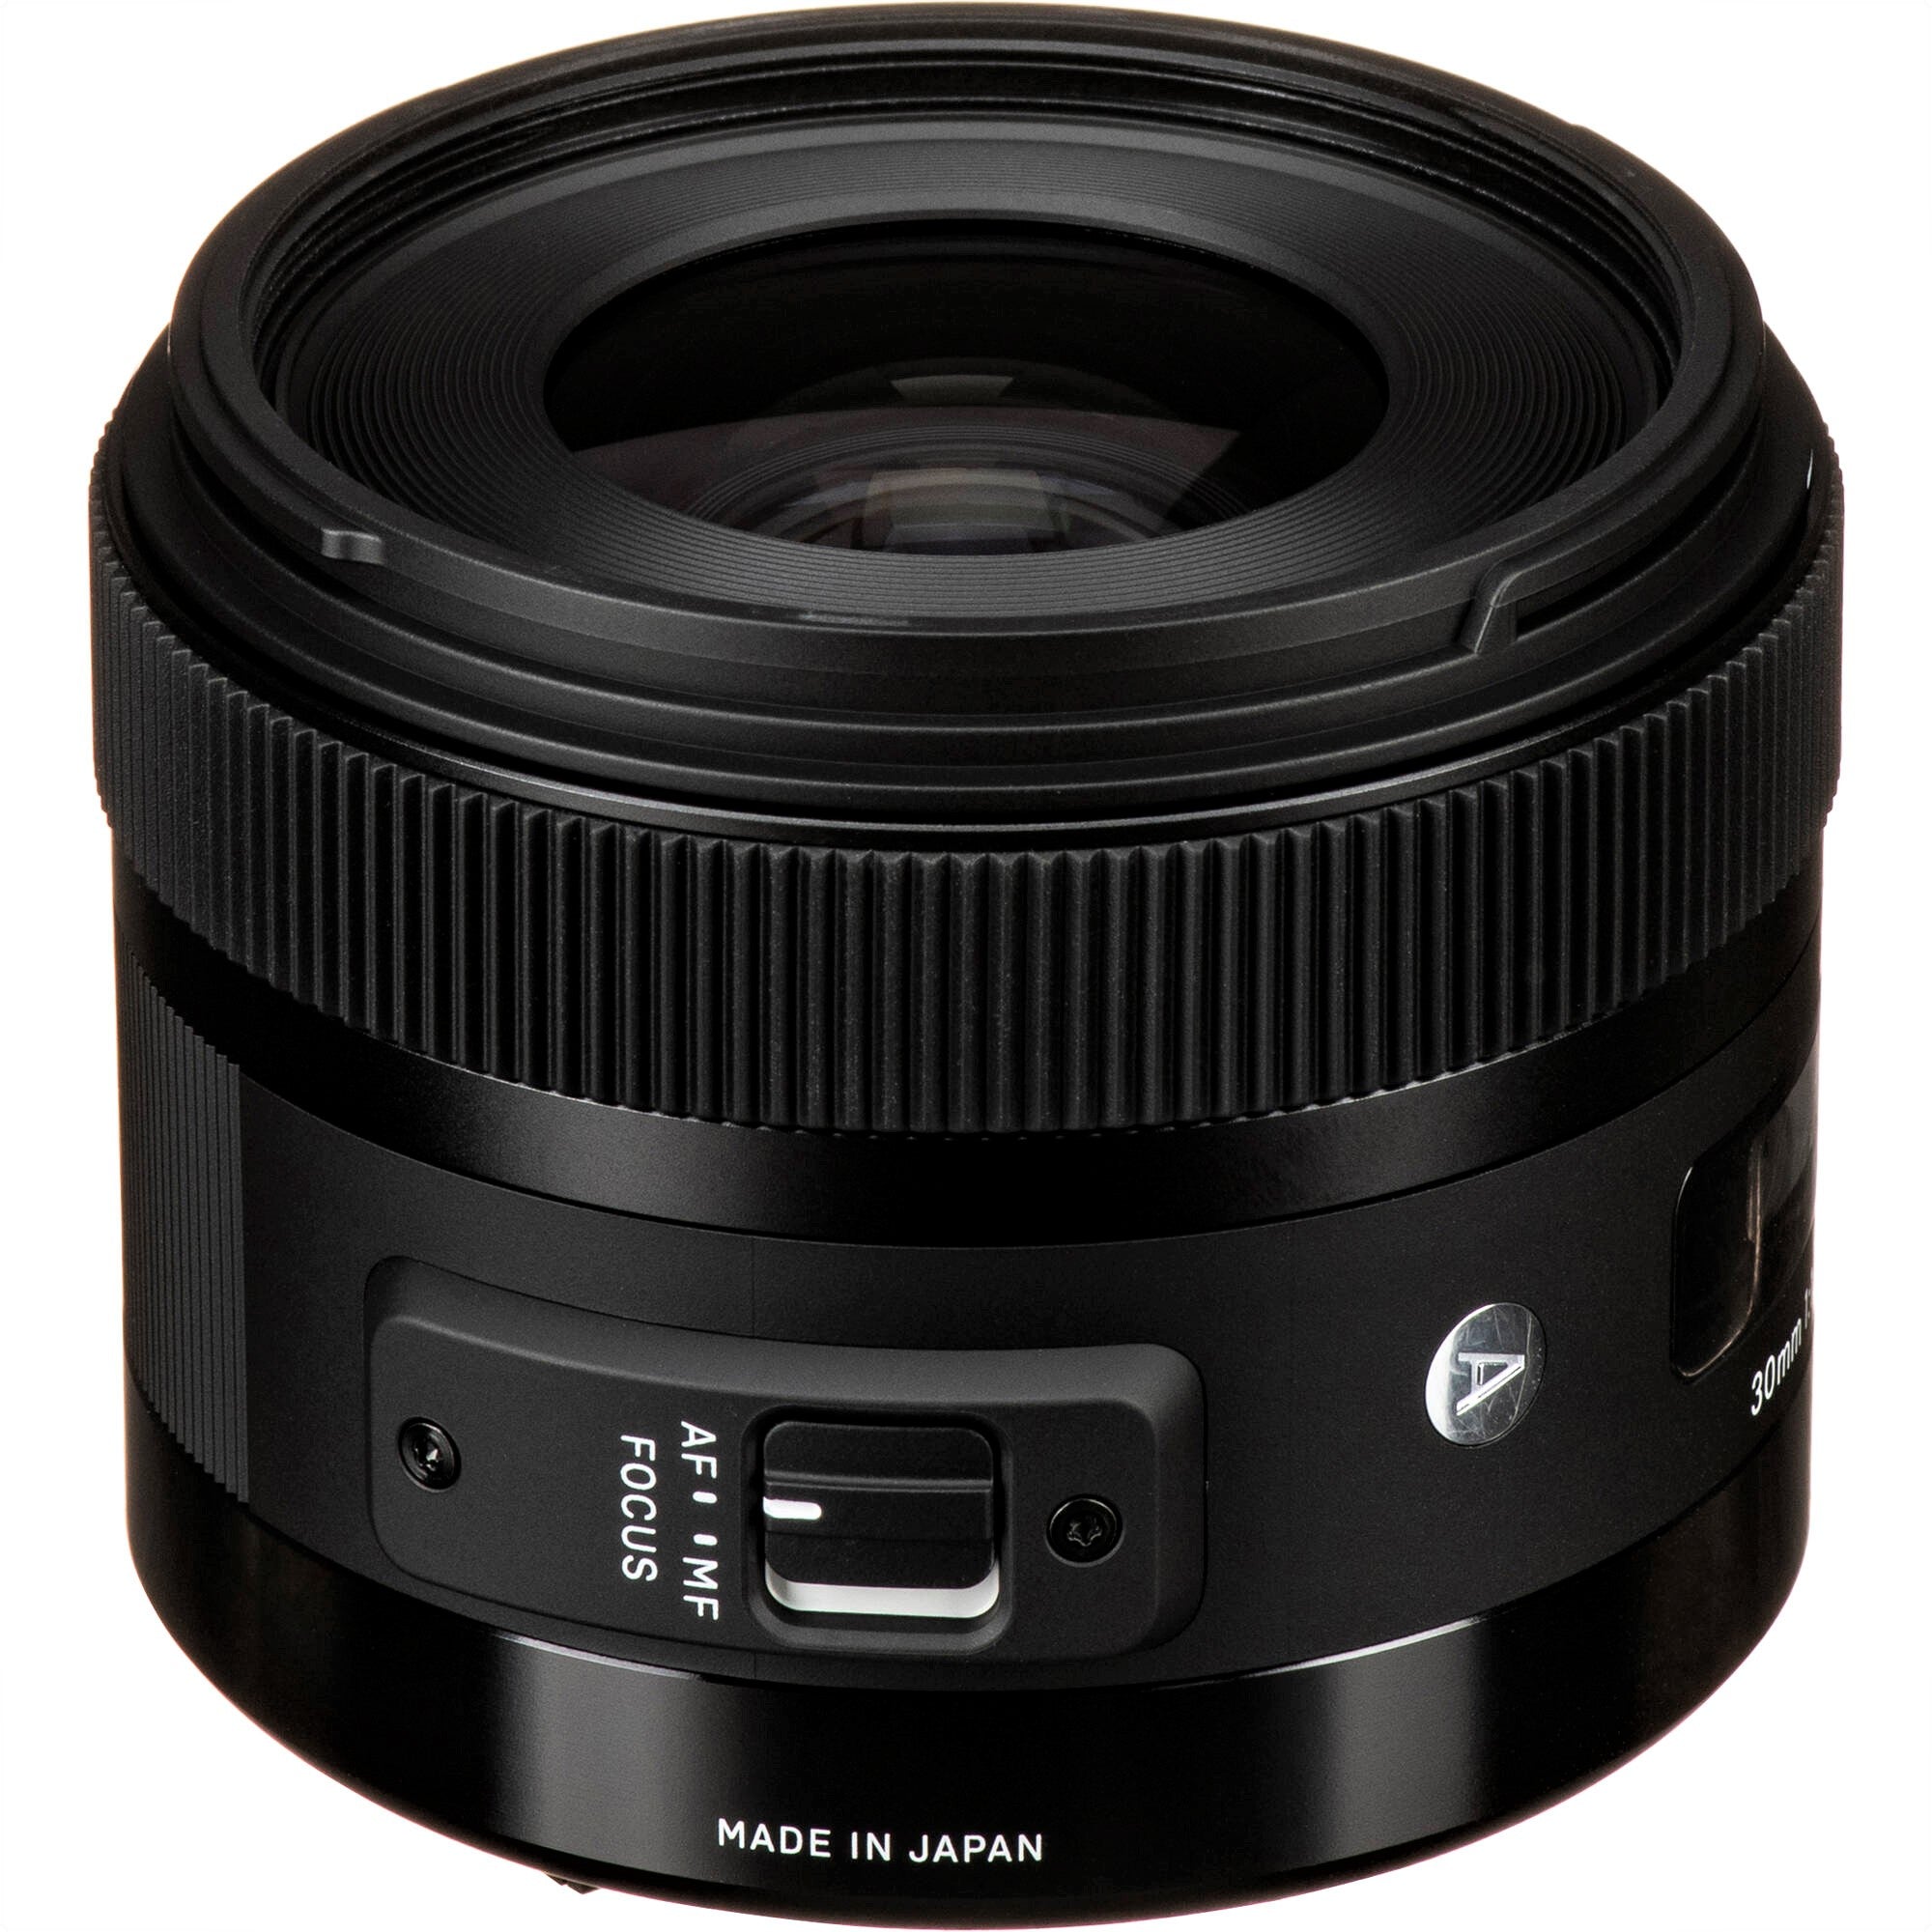 Sigma 35mm F1.4 DG HSM Art Lens for Pentax K